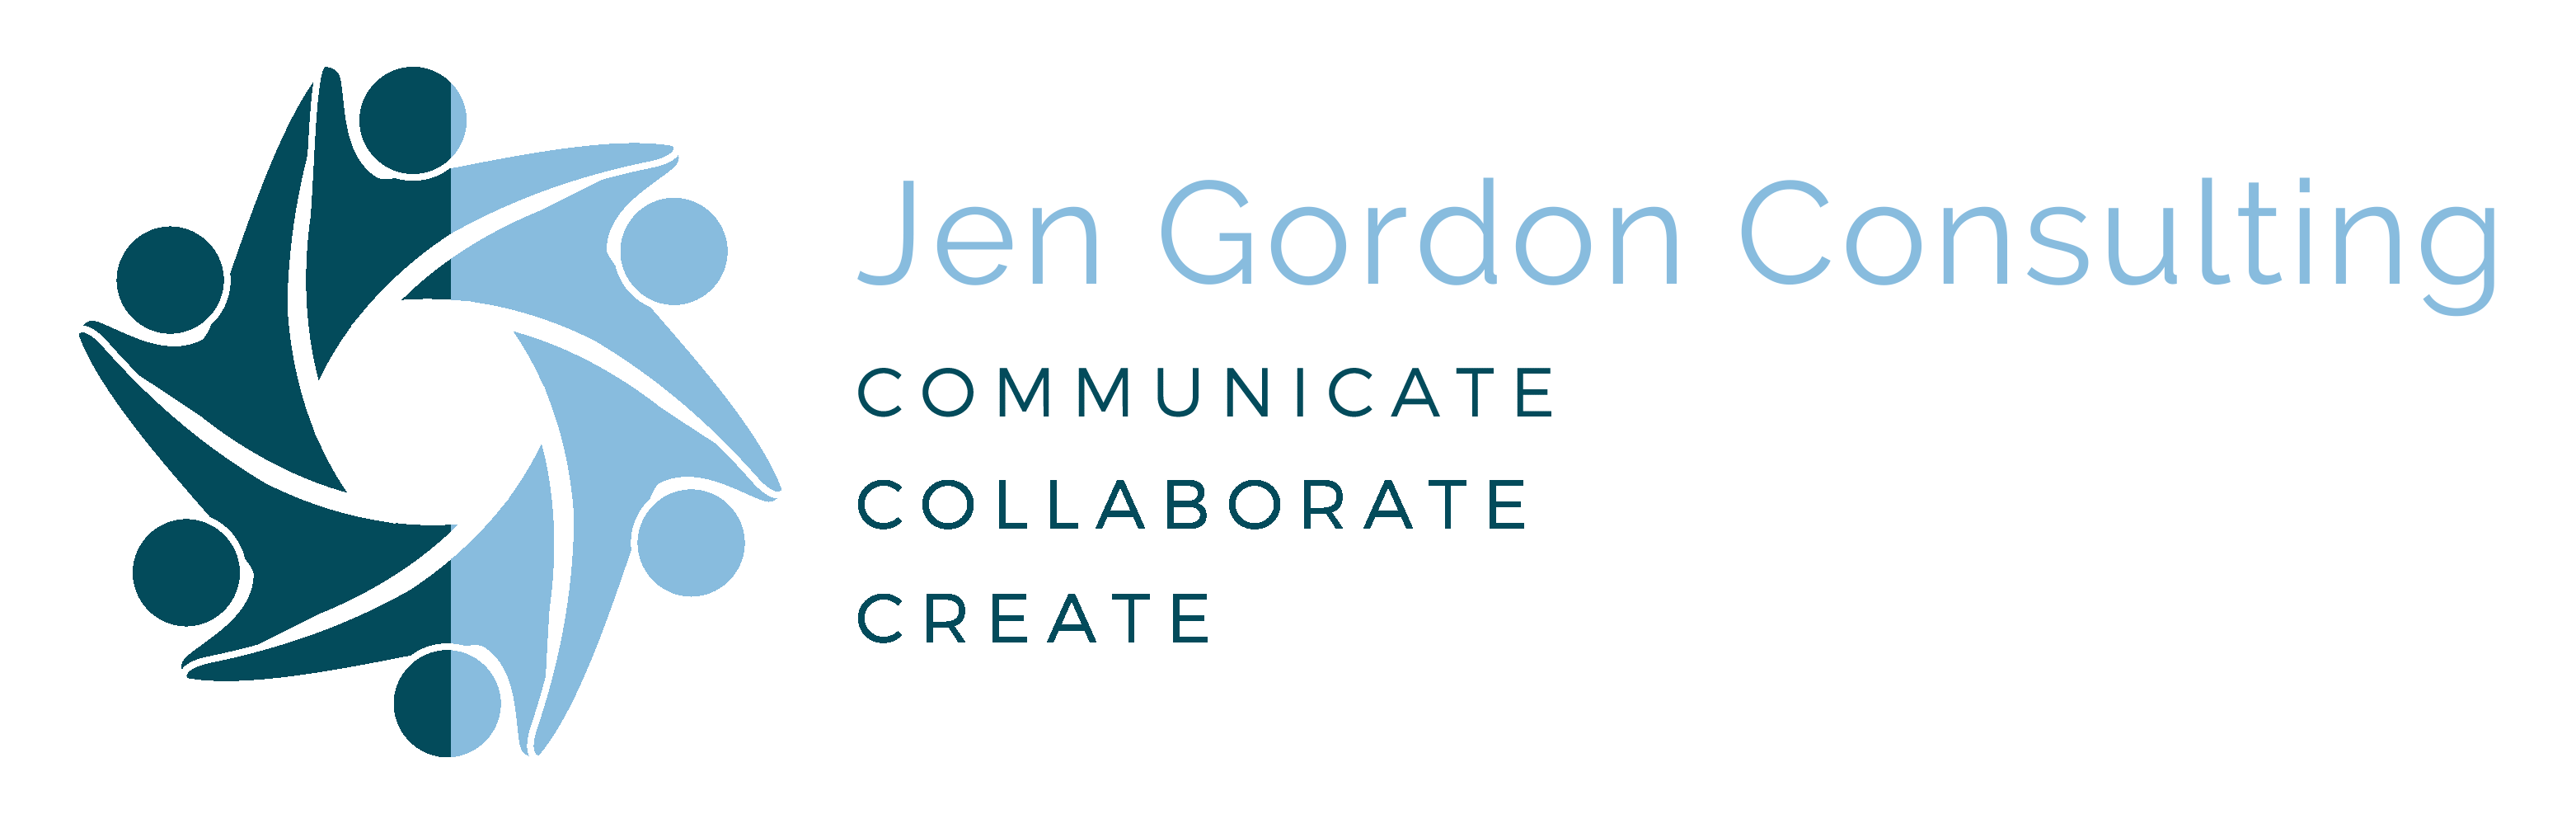 Jen Gordon Consulting